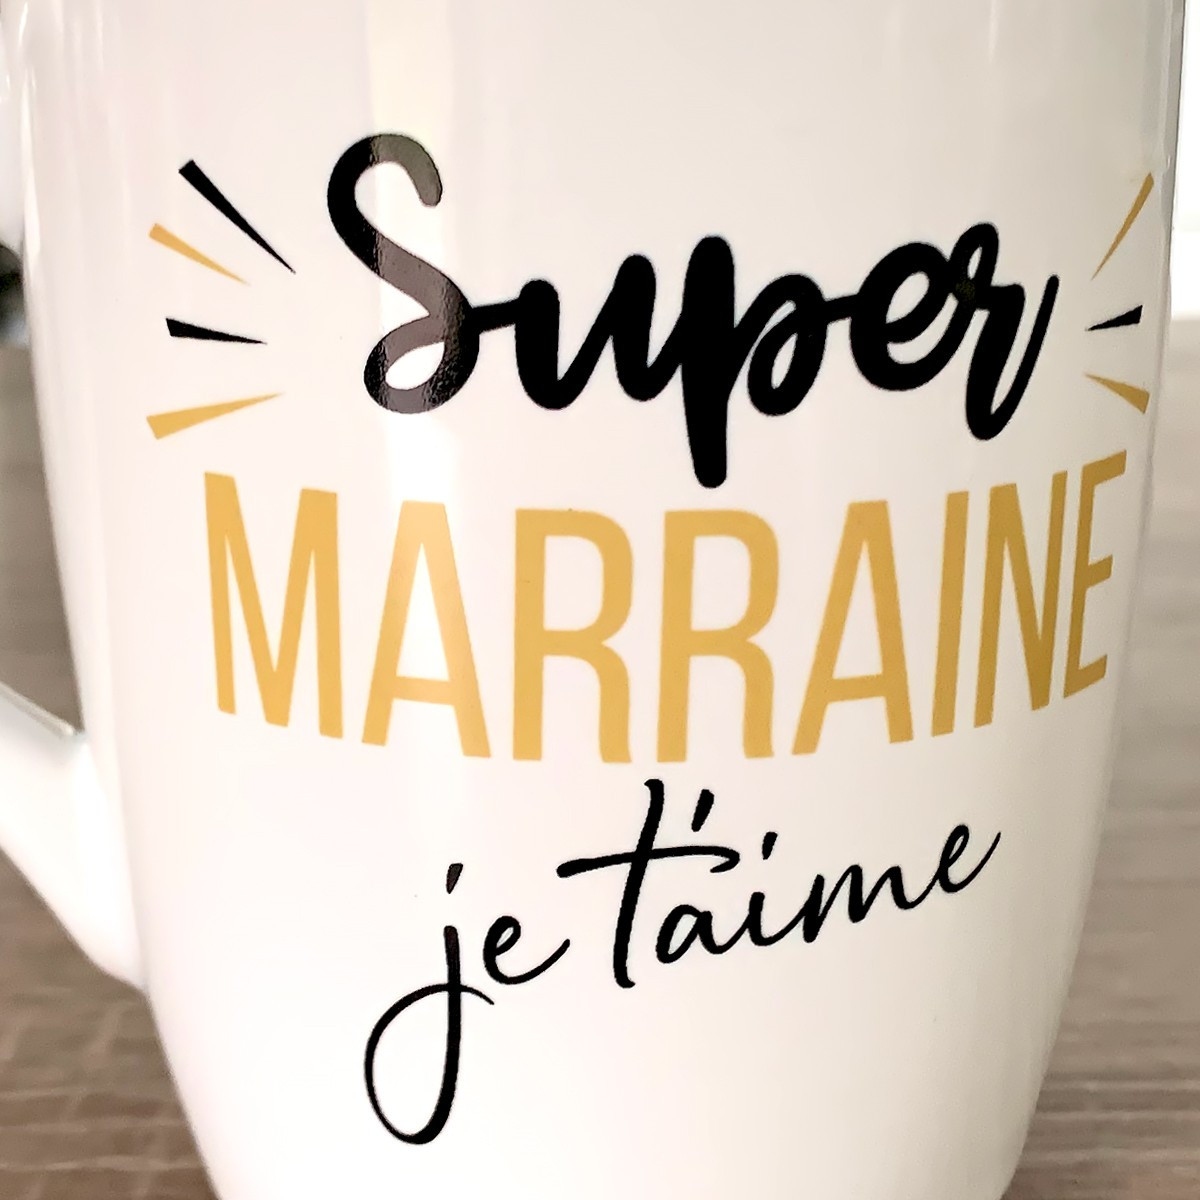 Mug Ma Super Marraine